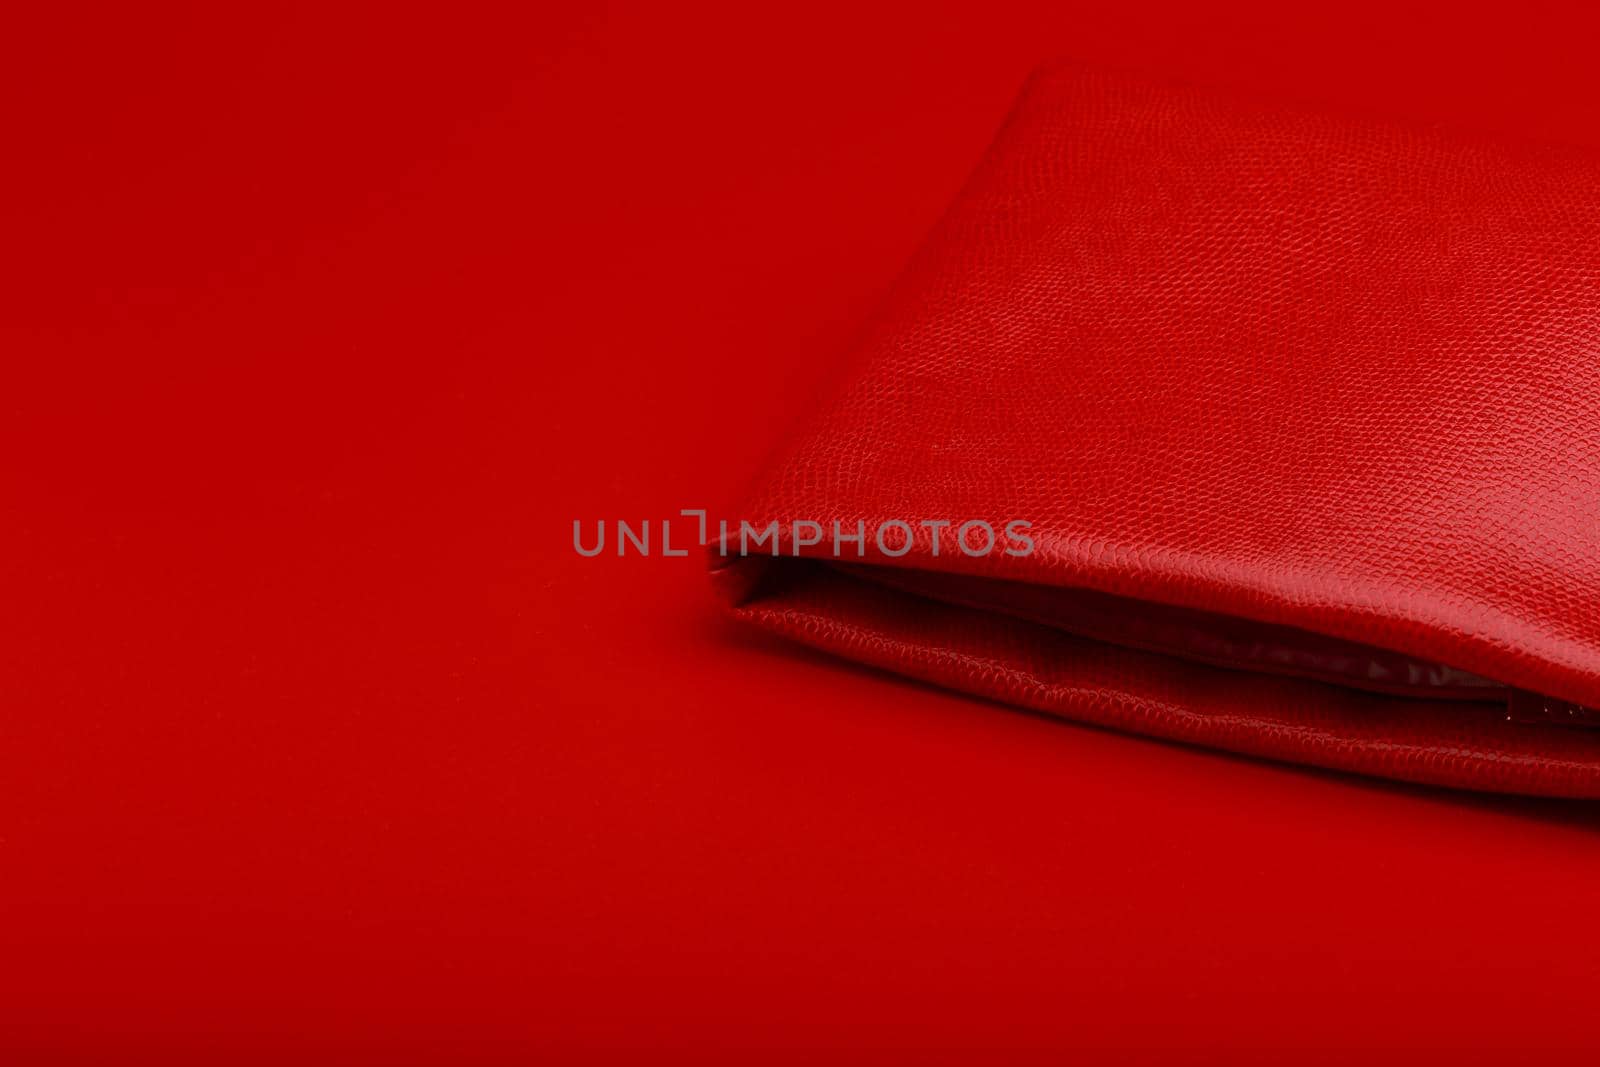 Minimalistic still life with red bag on red background by Senorina_Irina